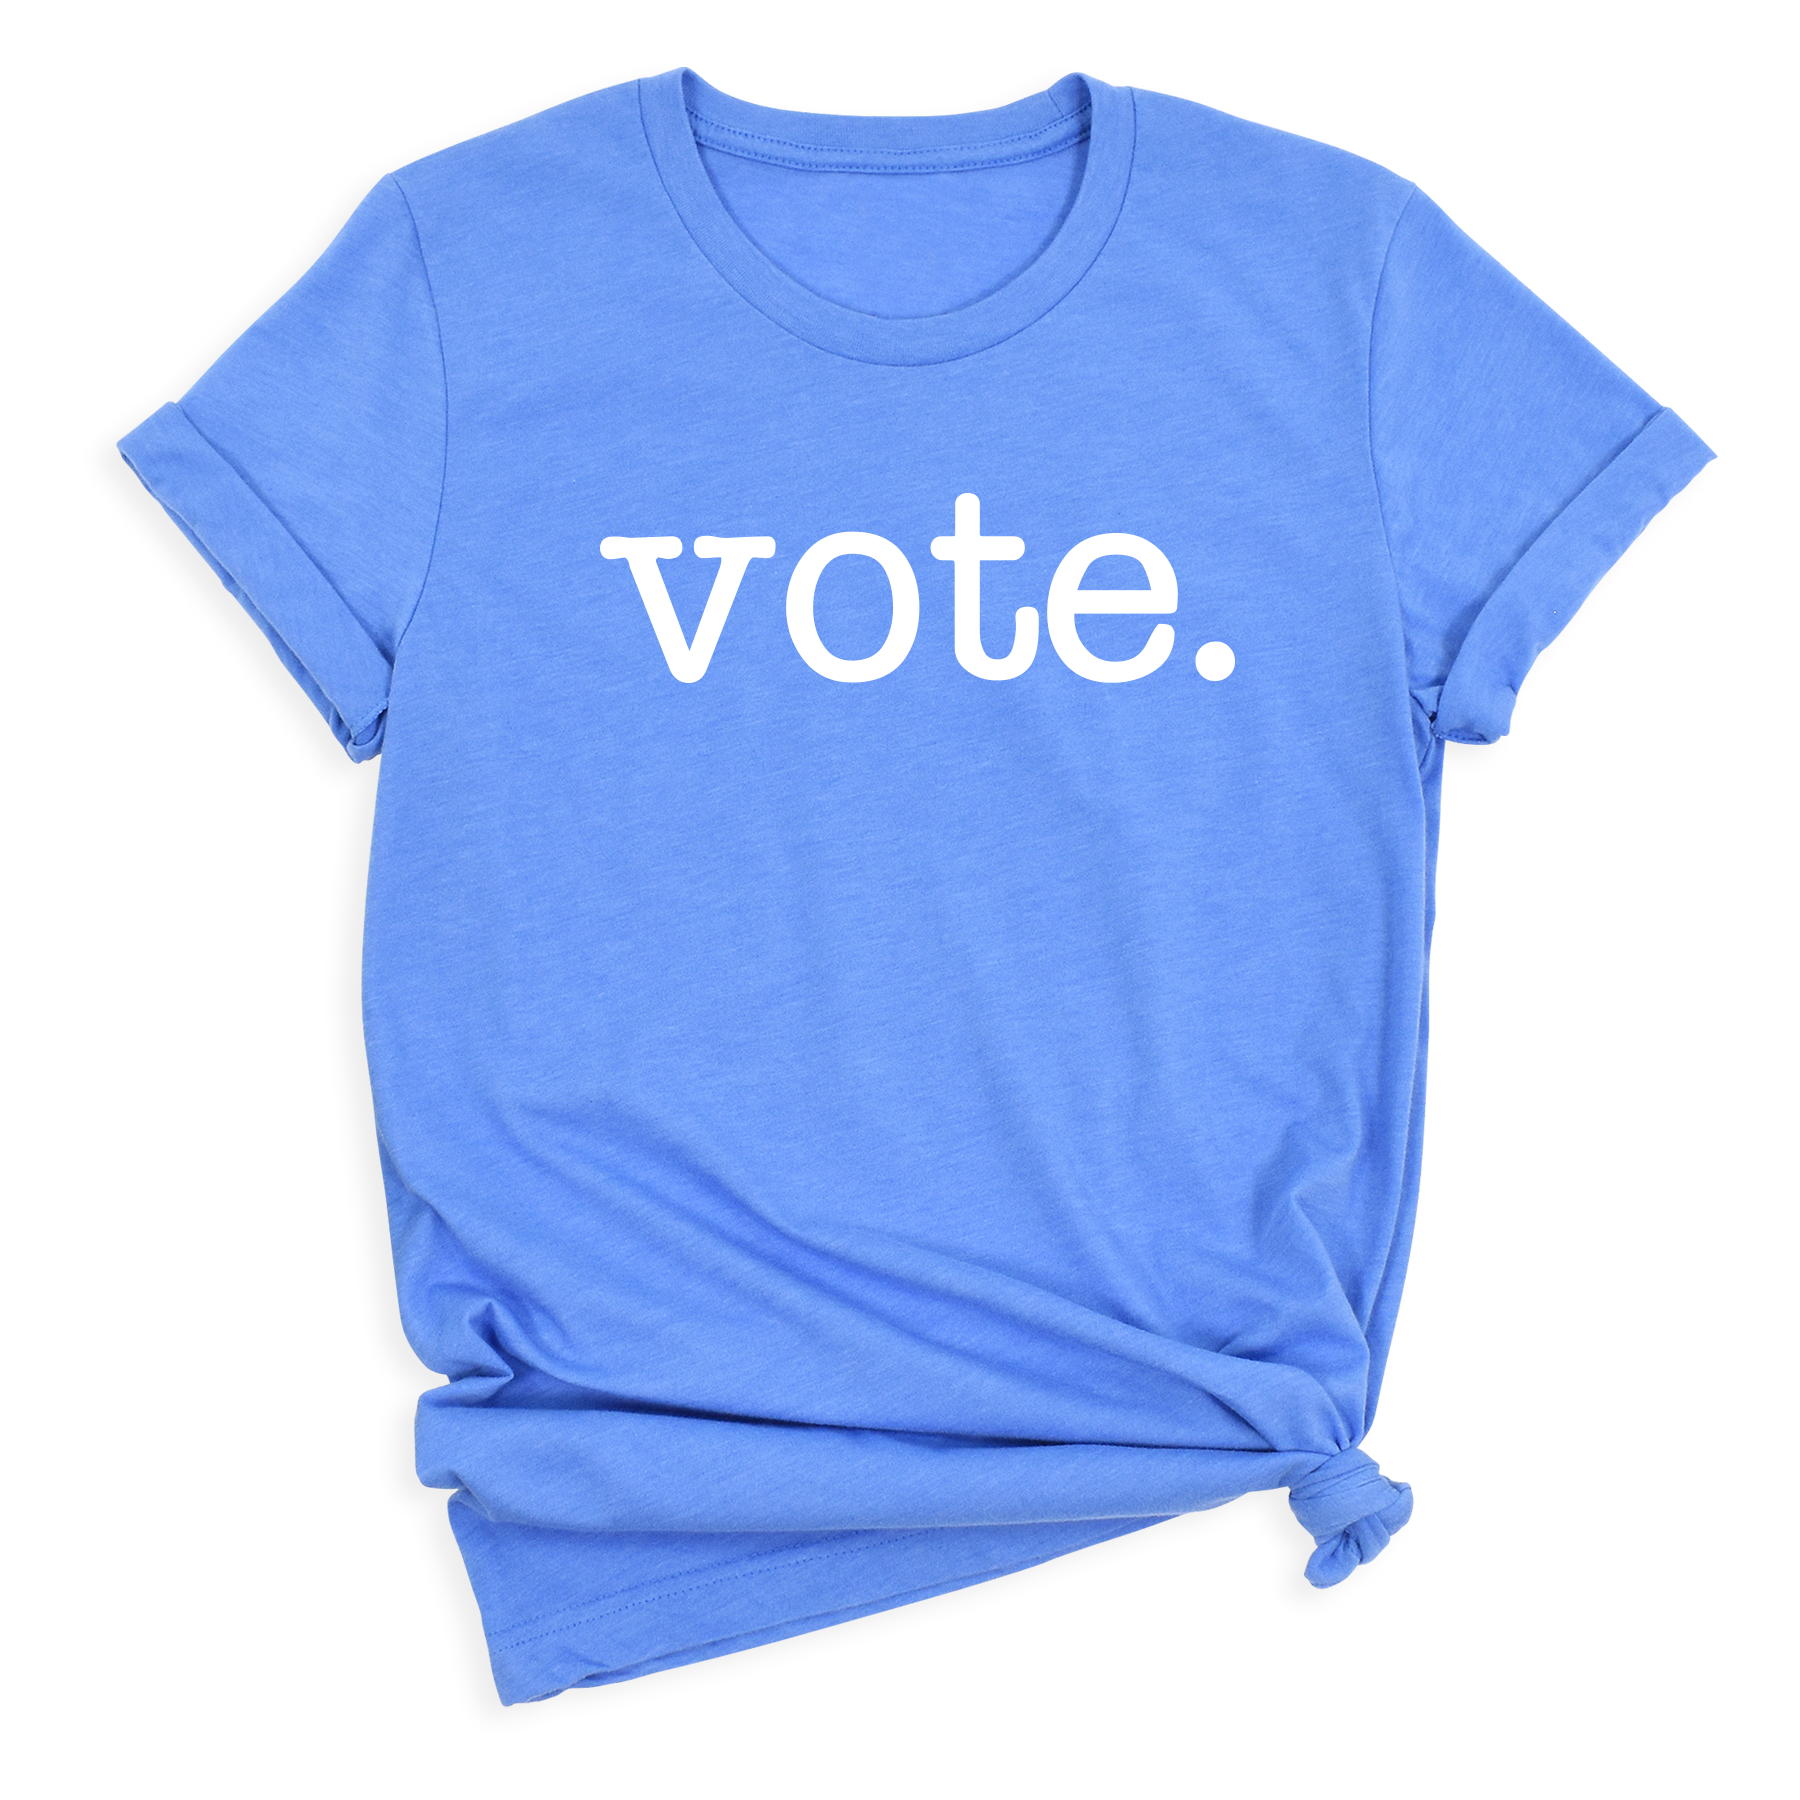 votes shirts